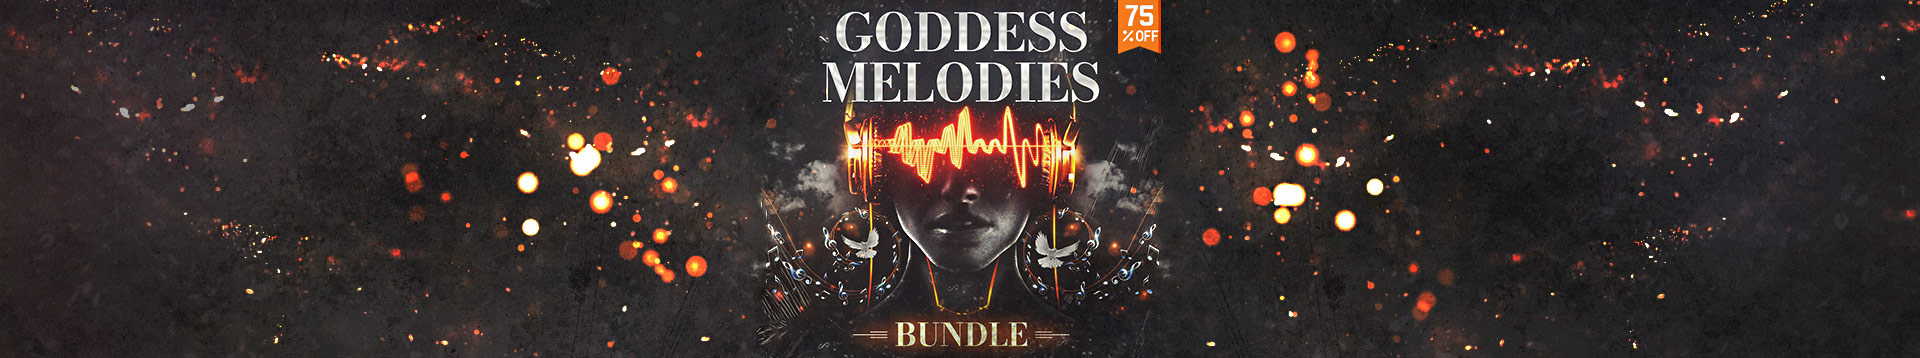 Goddess Melodies Bundle